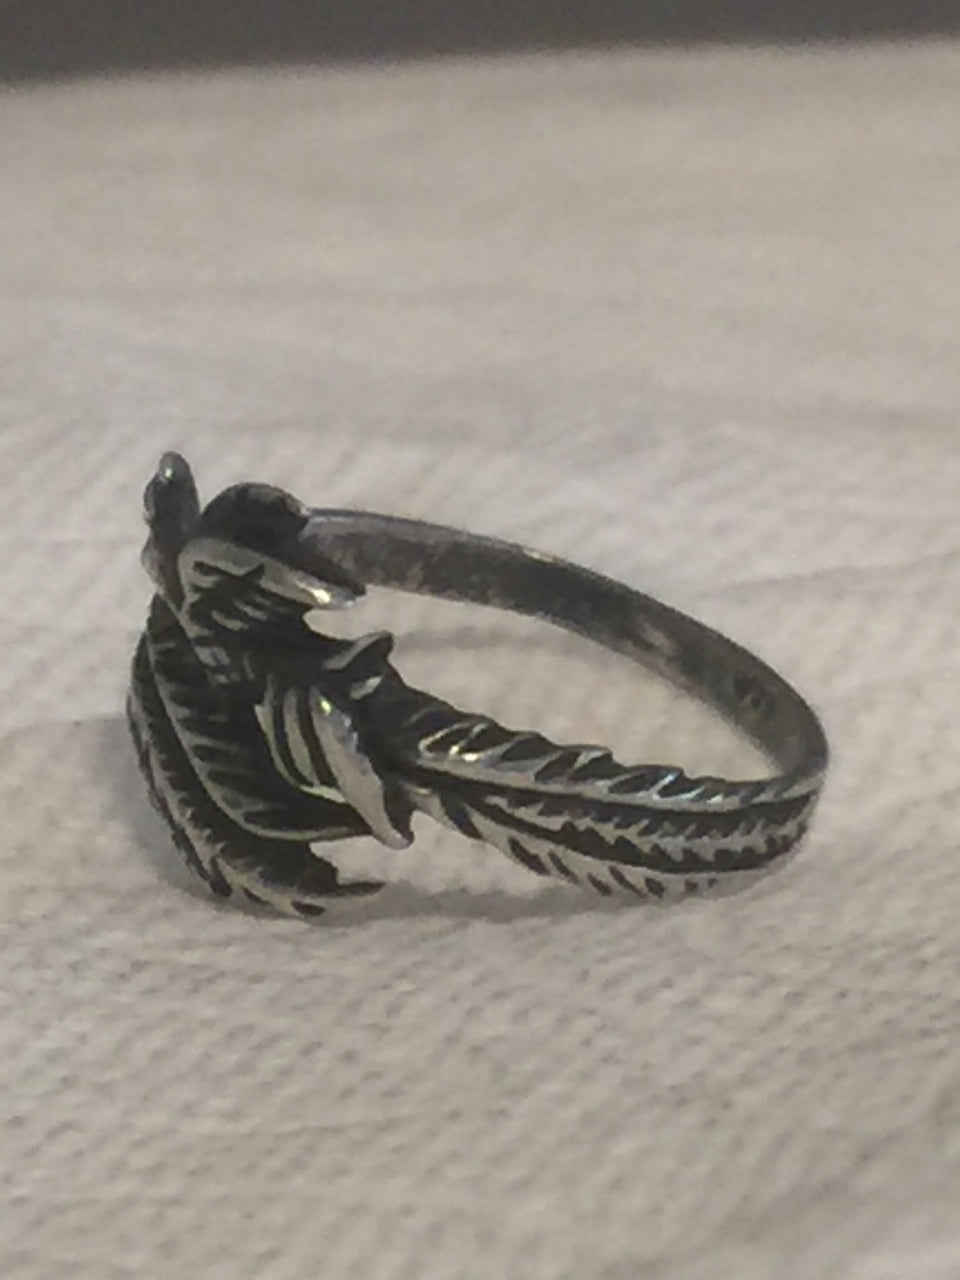 Vintage Sterling Silver Dragon Ring  Myth Fantasy Size 6.25   2.1g